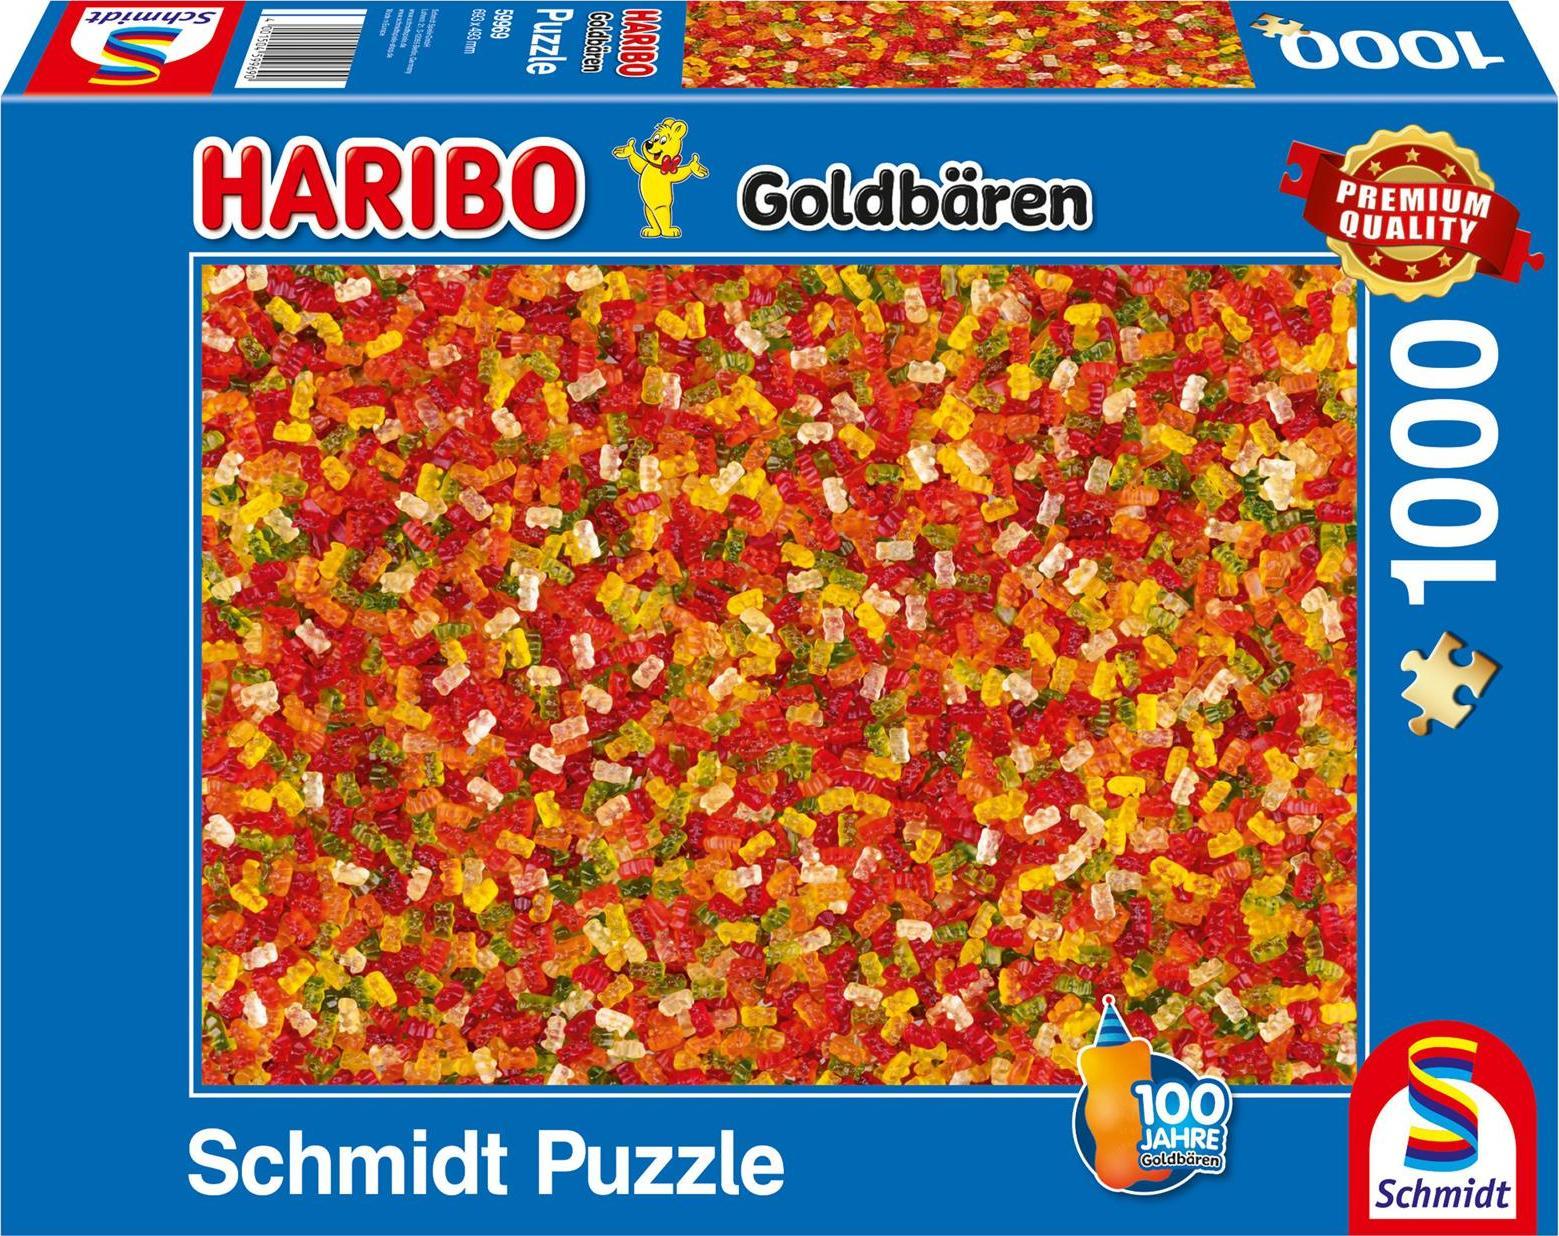 Schmidt Spiele Puzzle PQ 1000 Haribo Golden Bears G3